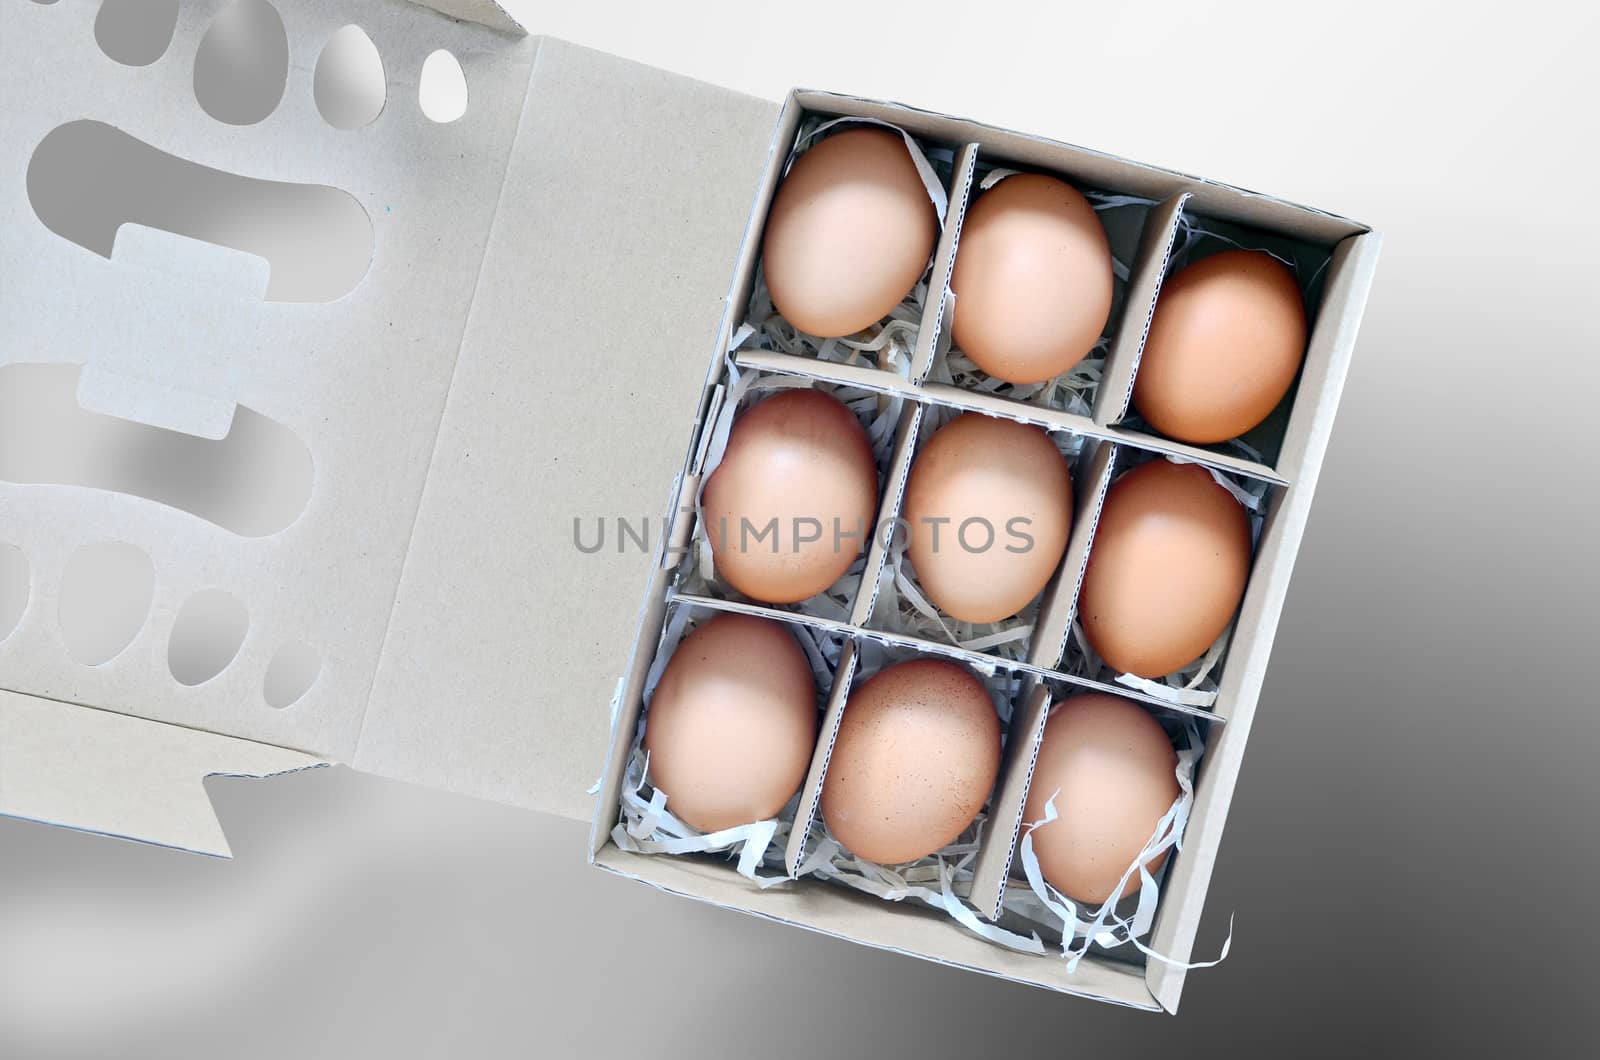 Eggs box by Vectorex